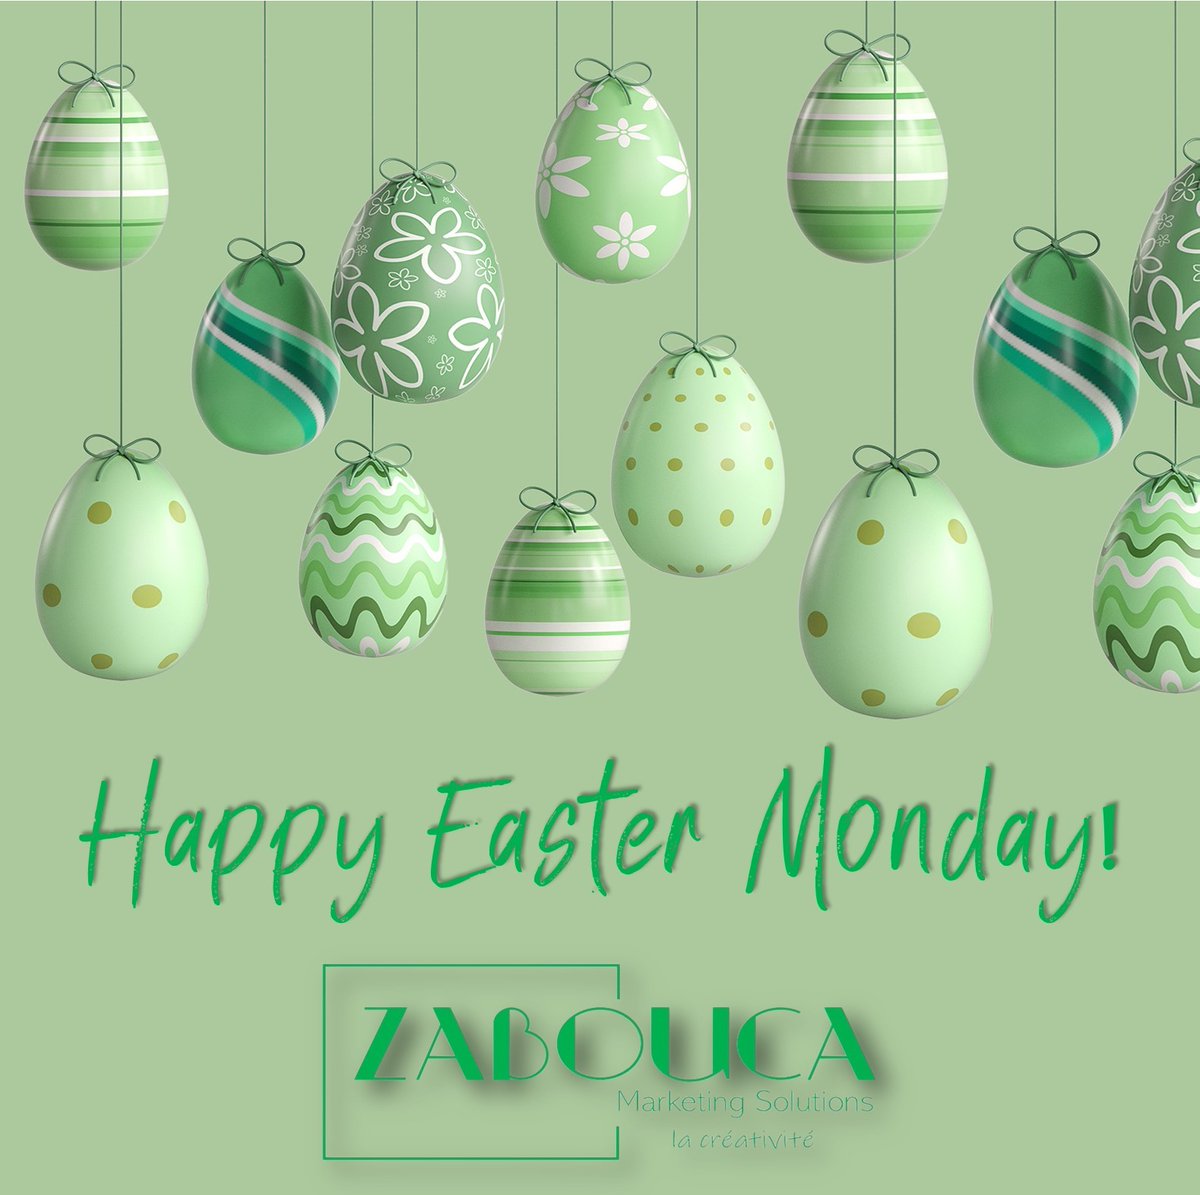 Happy Easter Monday everyone!

#zaboucamarketing #socialmediamanagement #virtualassistantservices #seo #retail #promotionalitems #easter #eastermonday2024 #trinidadandtobago